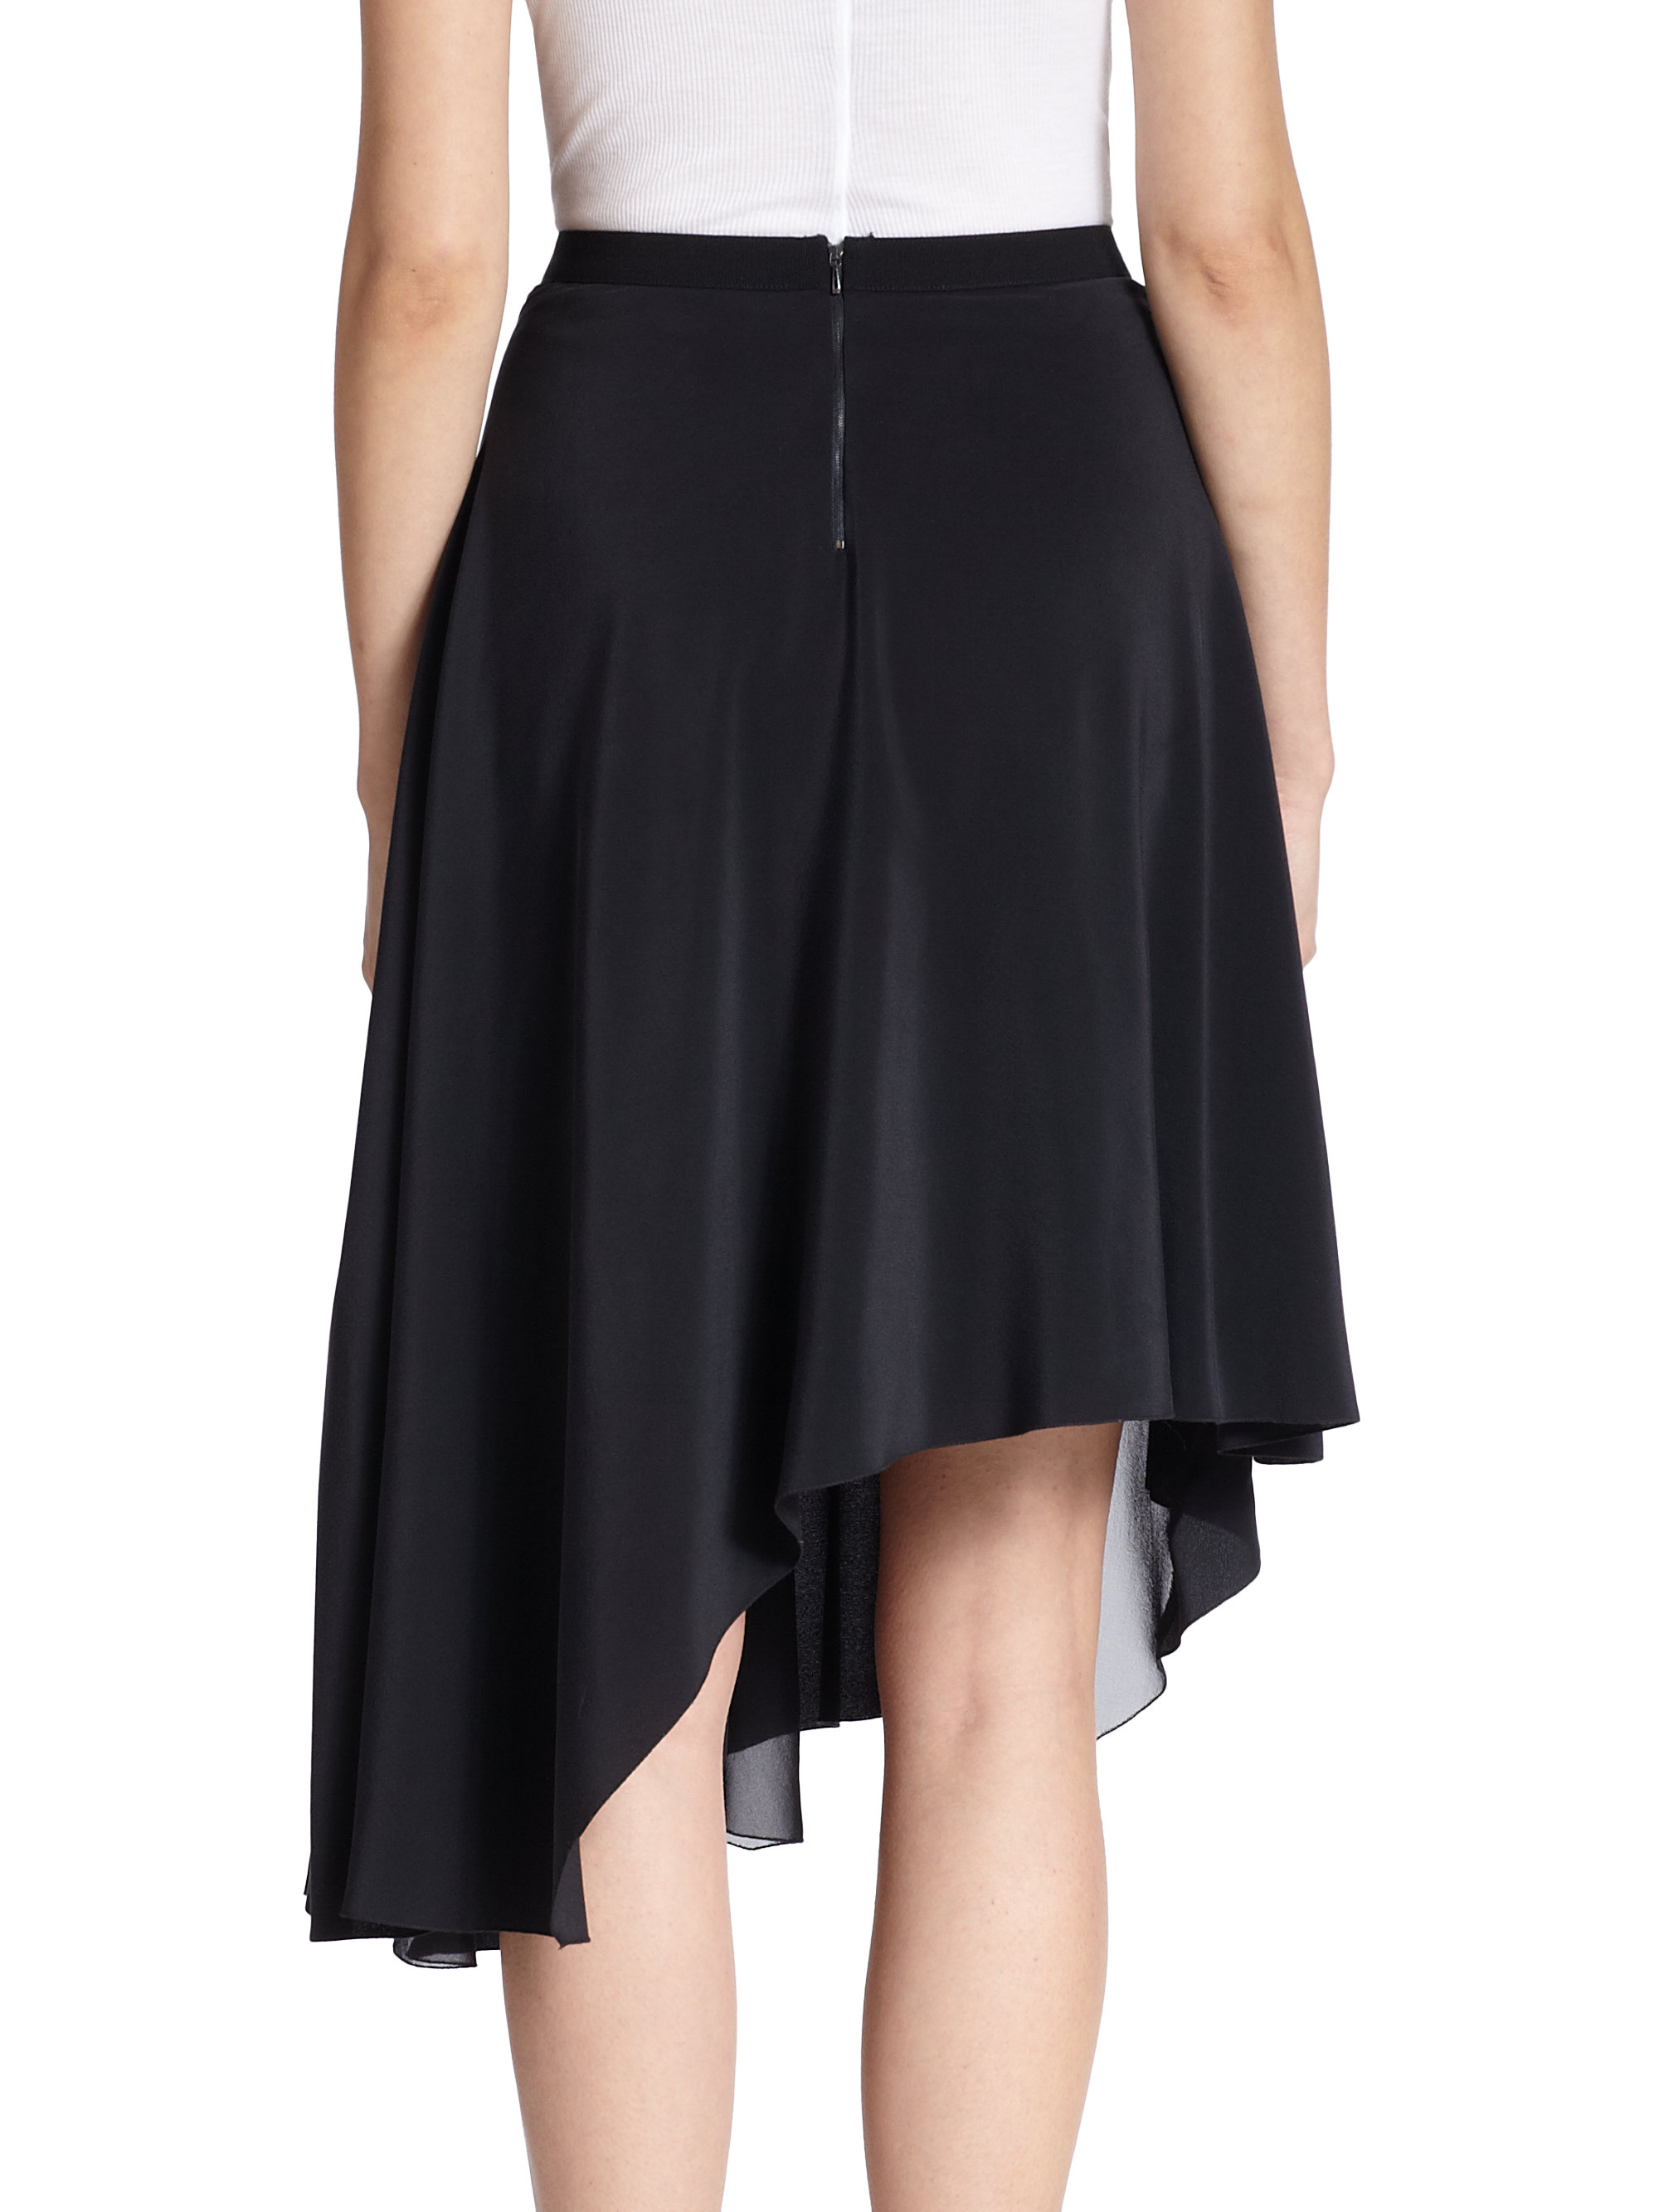 Elie tahari Silk Sachi Skirt in Black | Lyst